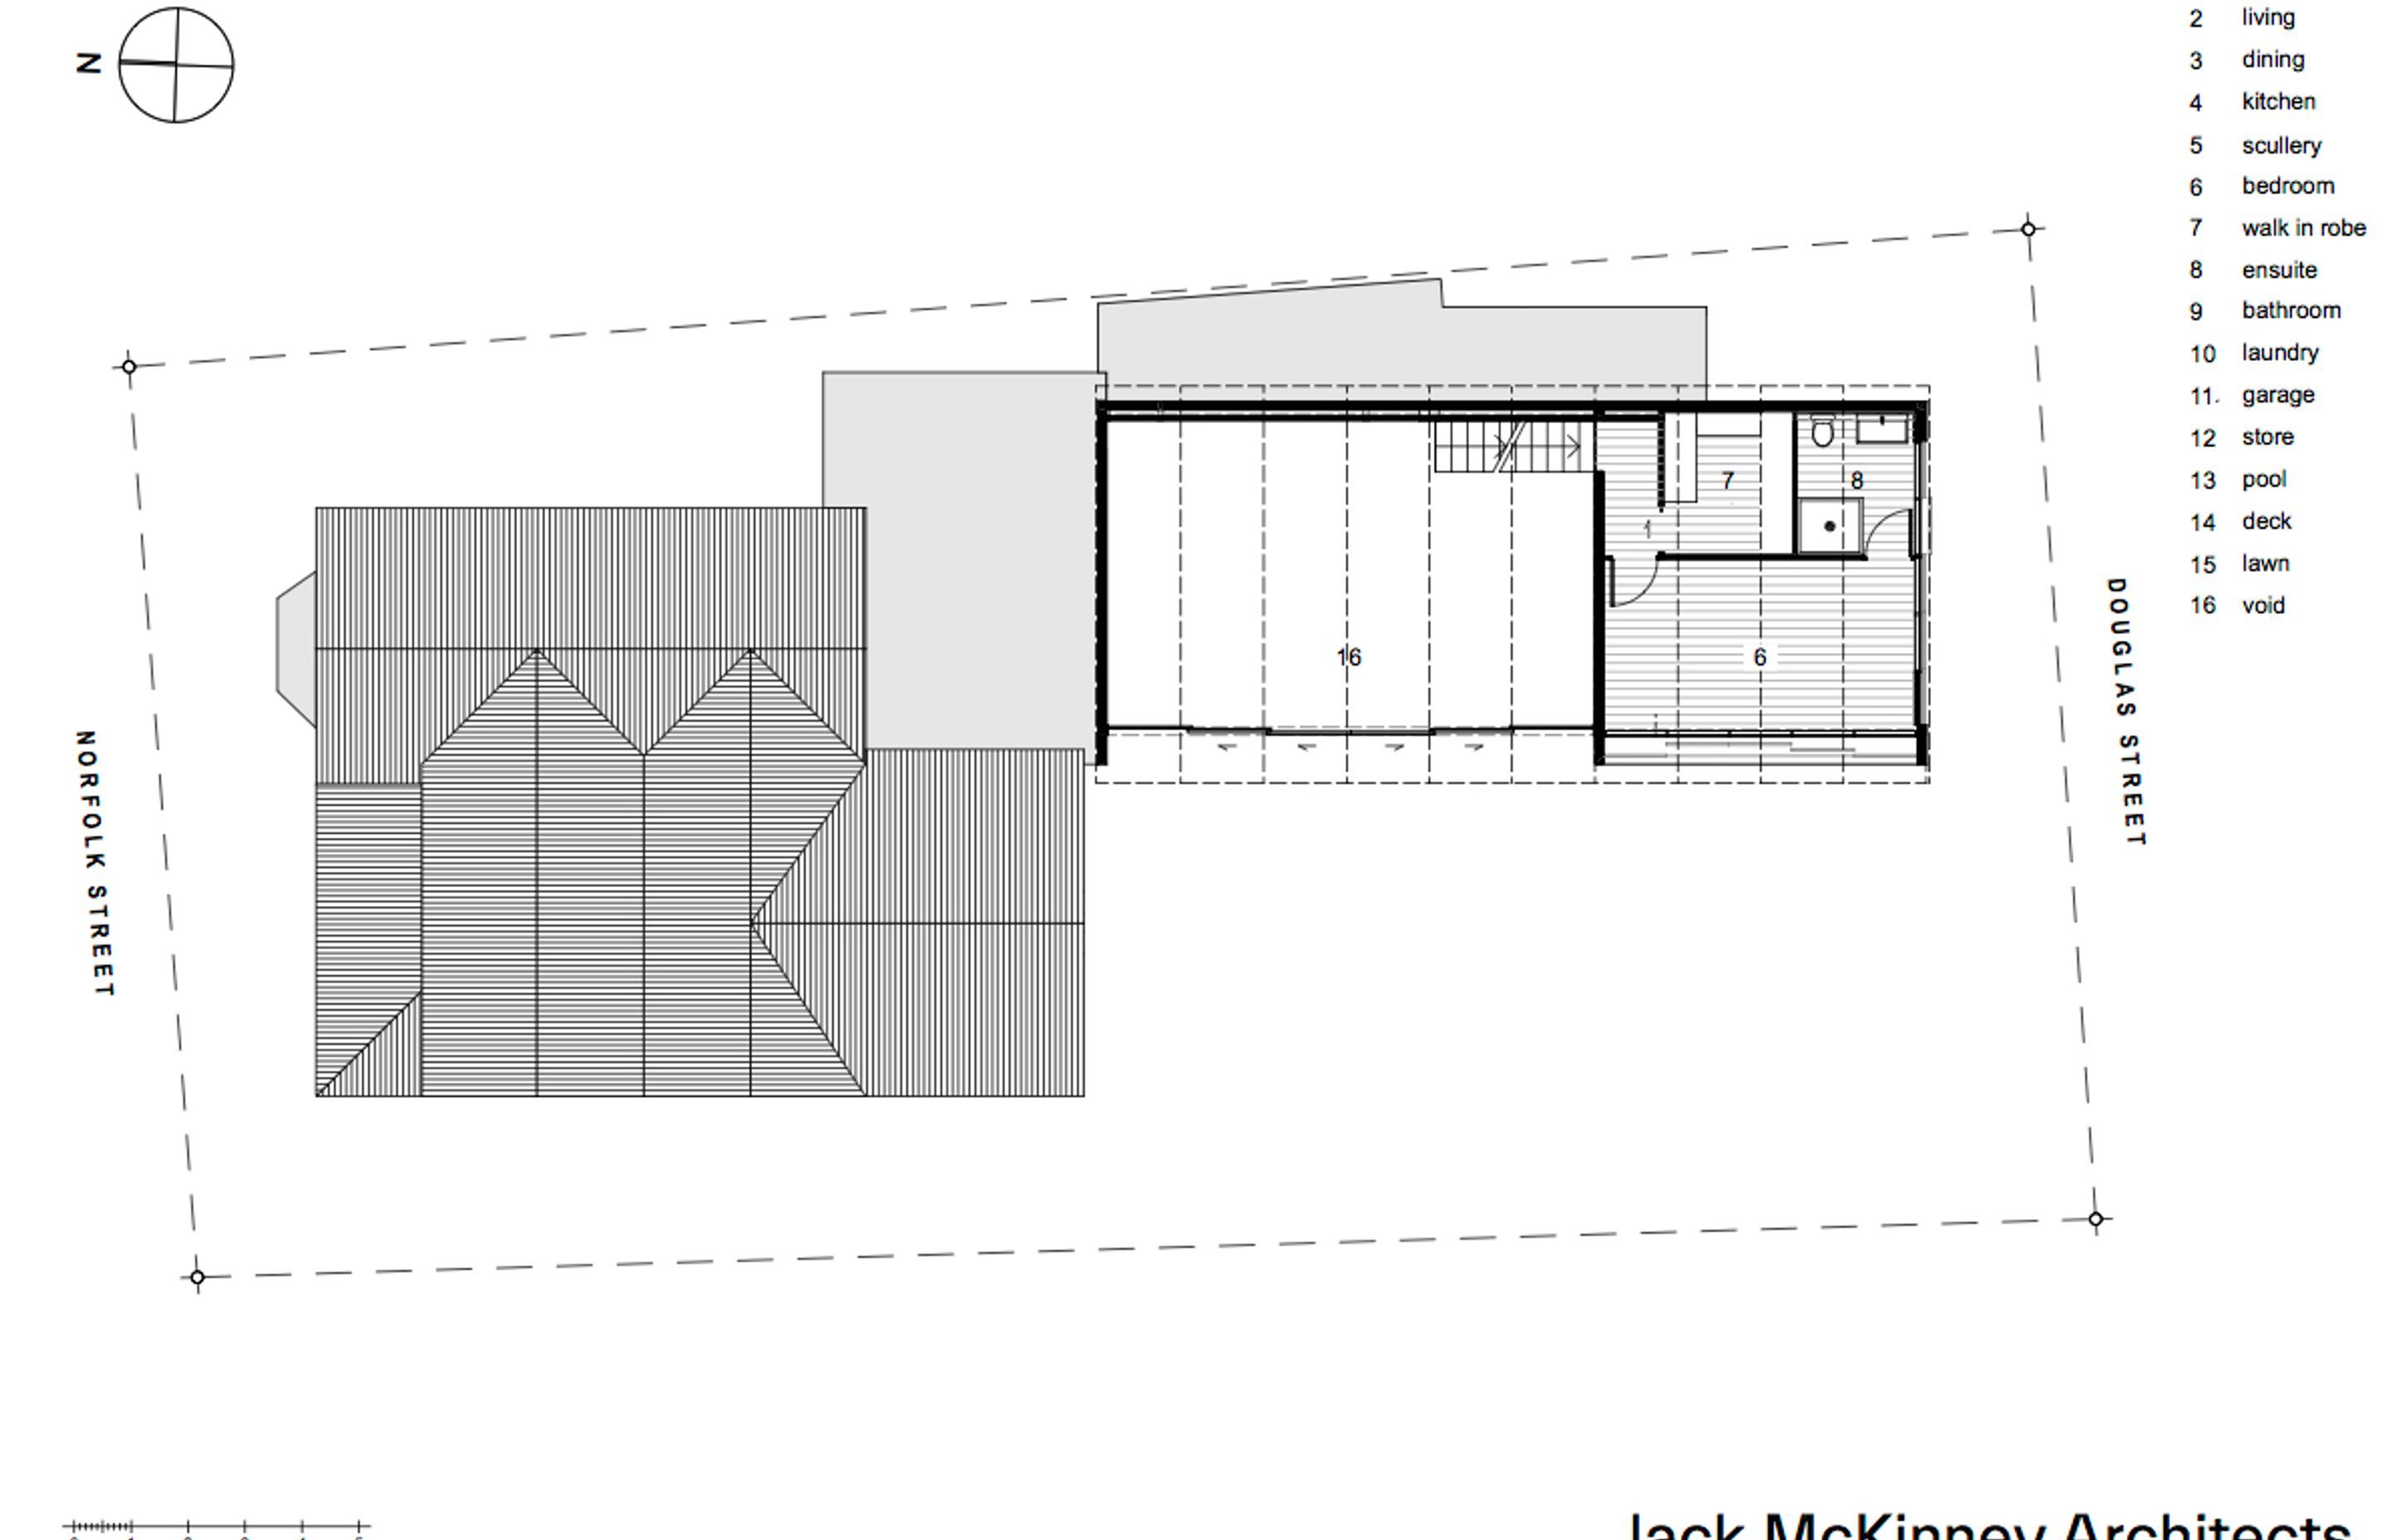 First-floor plan by Jack McKinney Architects.